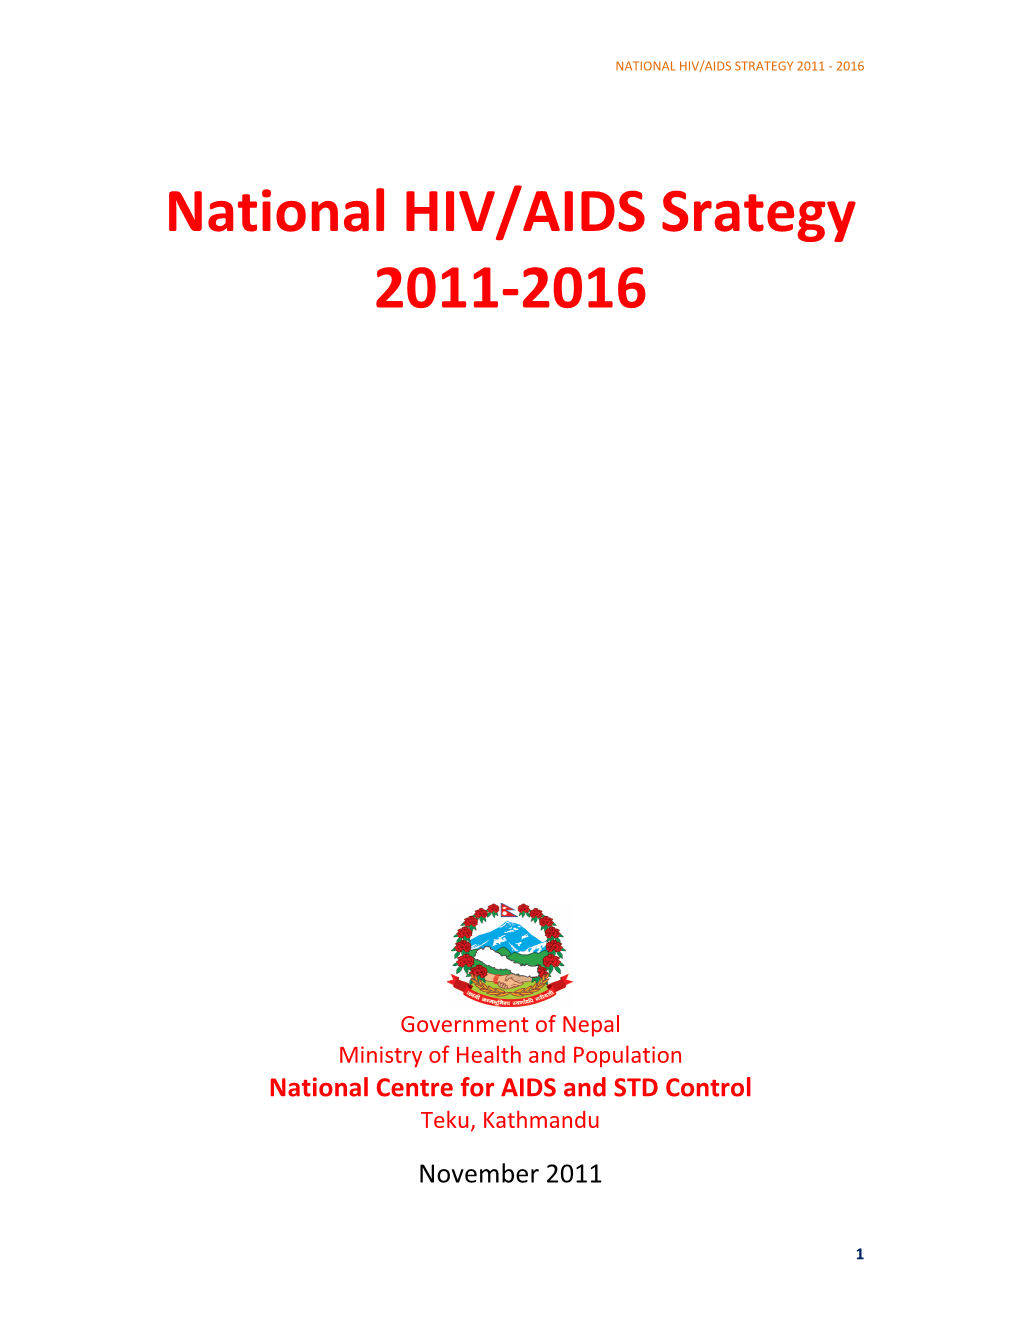 National HIV/AIDS Srategy 2011-2016